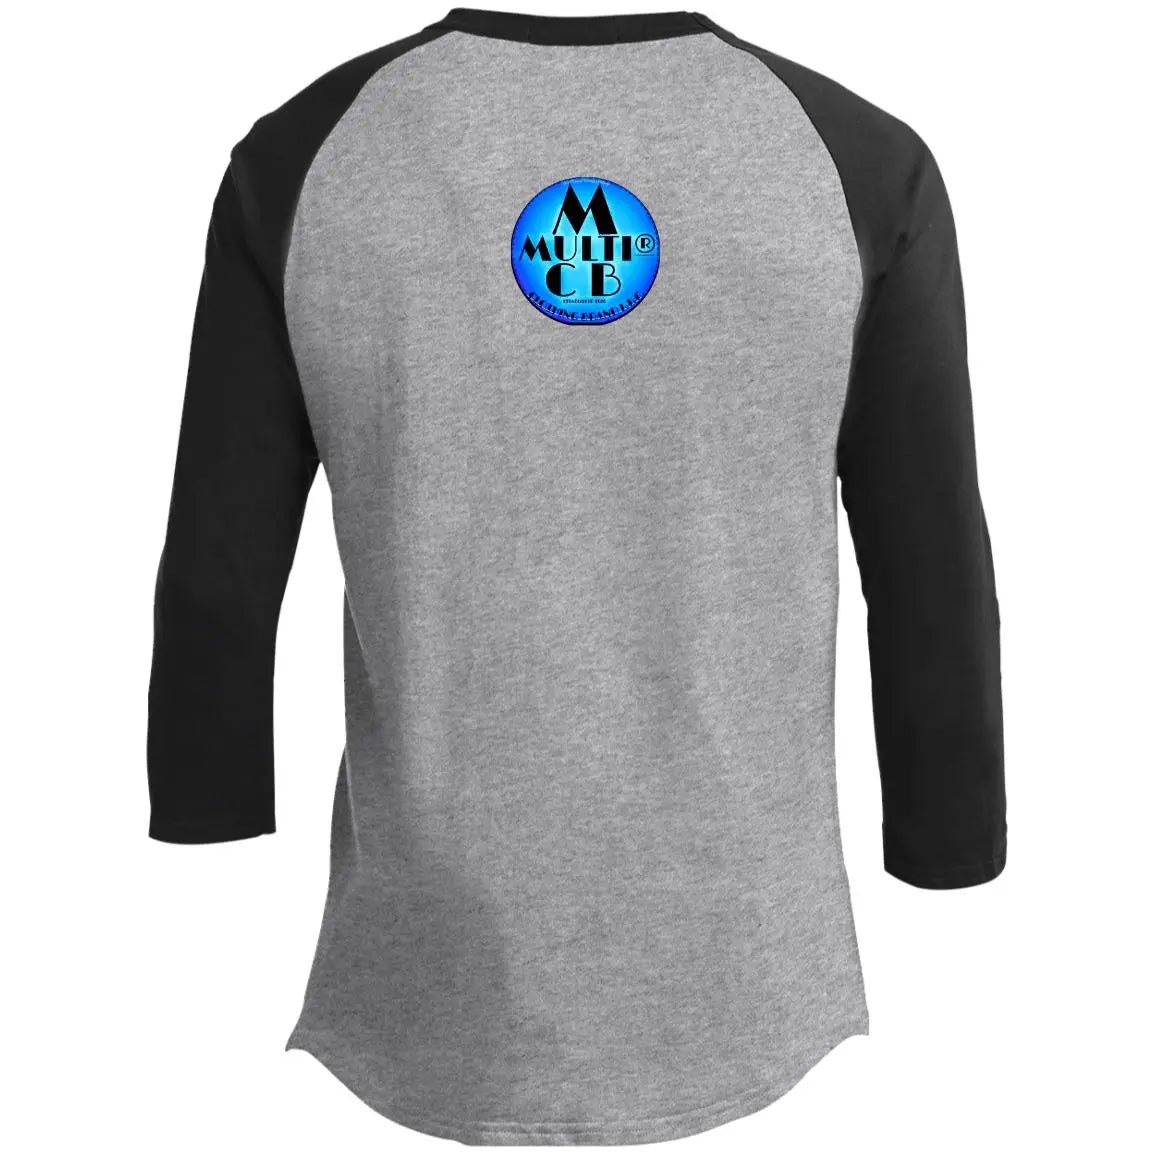 Blue Owl - Youth 3/4 Raglan Sleeve Shirt CustomCat